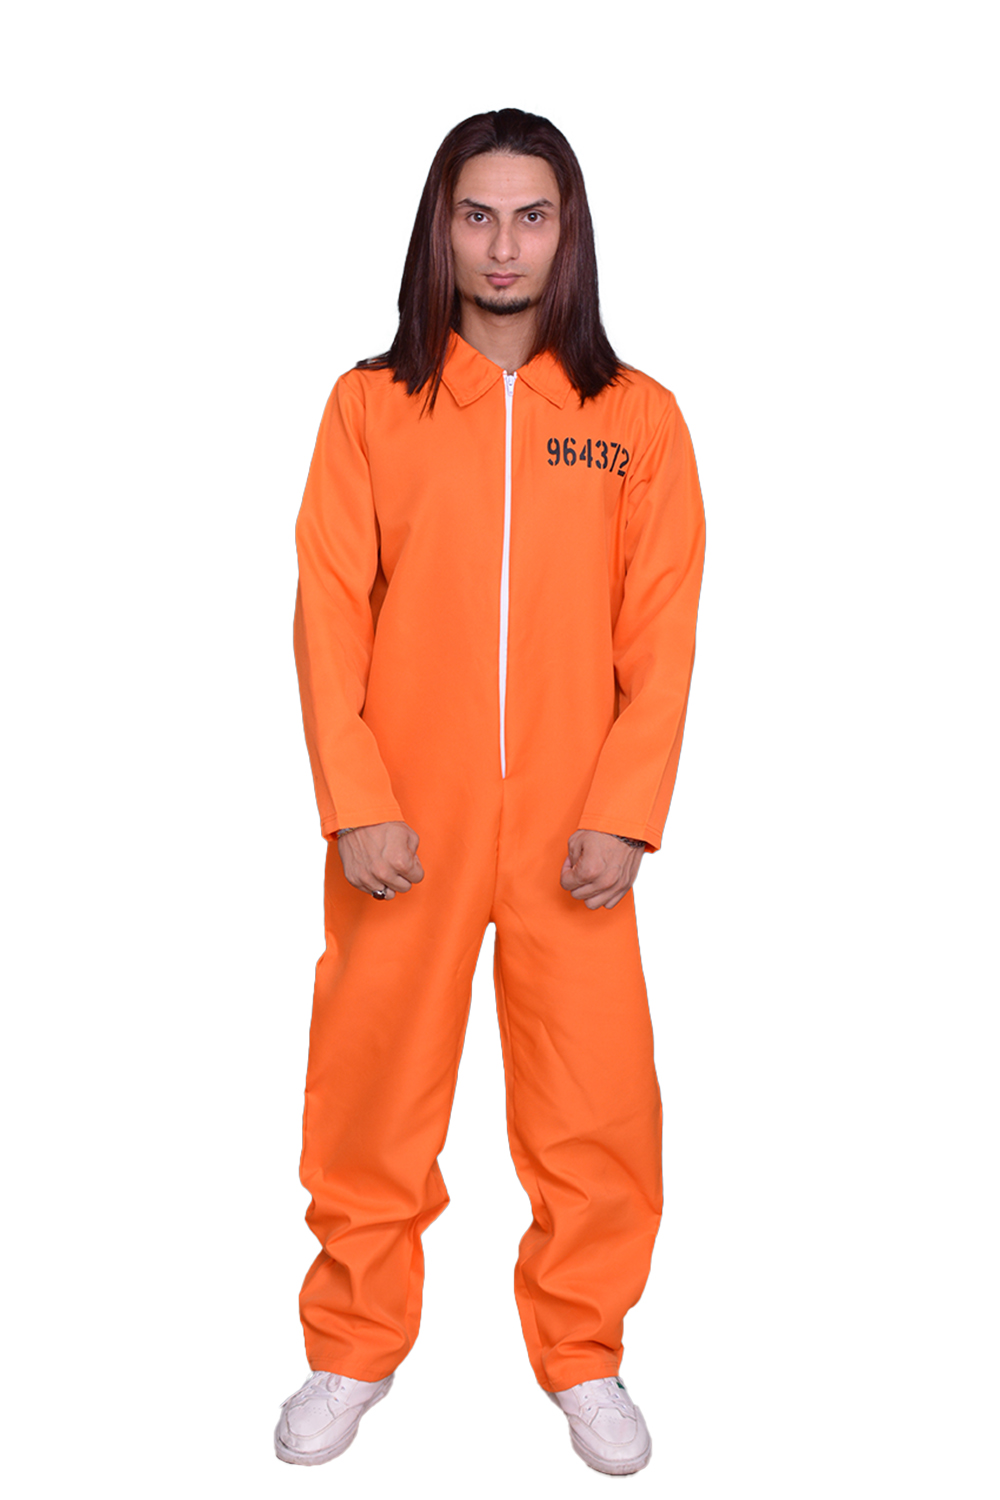 Wickedfun Mens Orange Prisoner Coverall Jumpsuit 